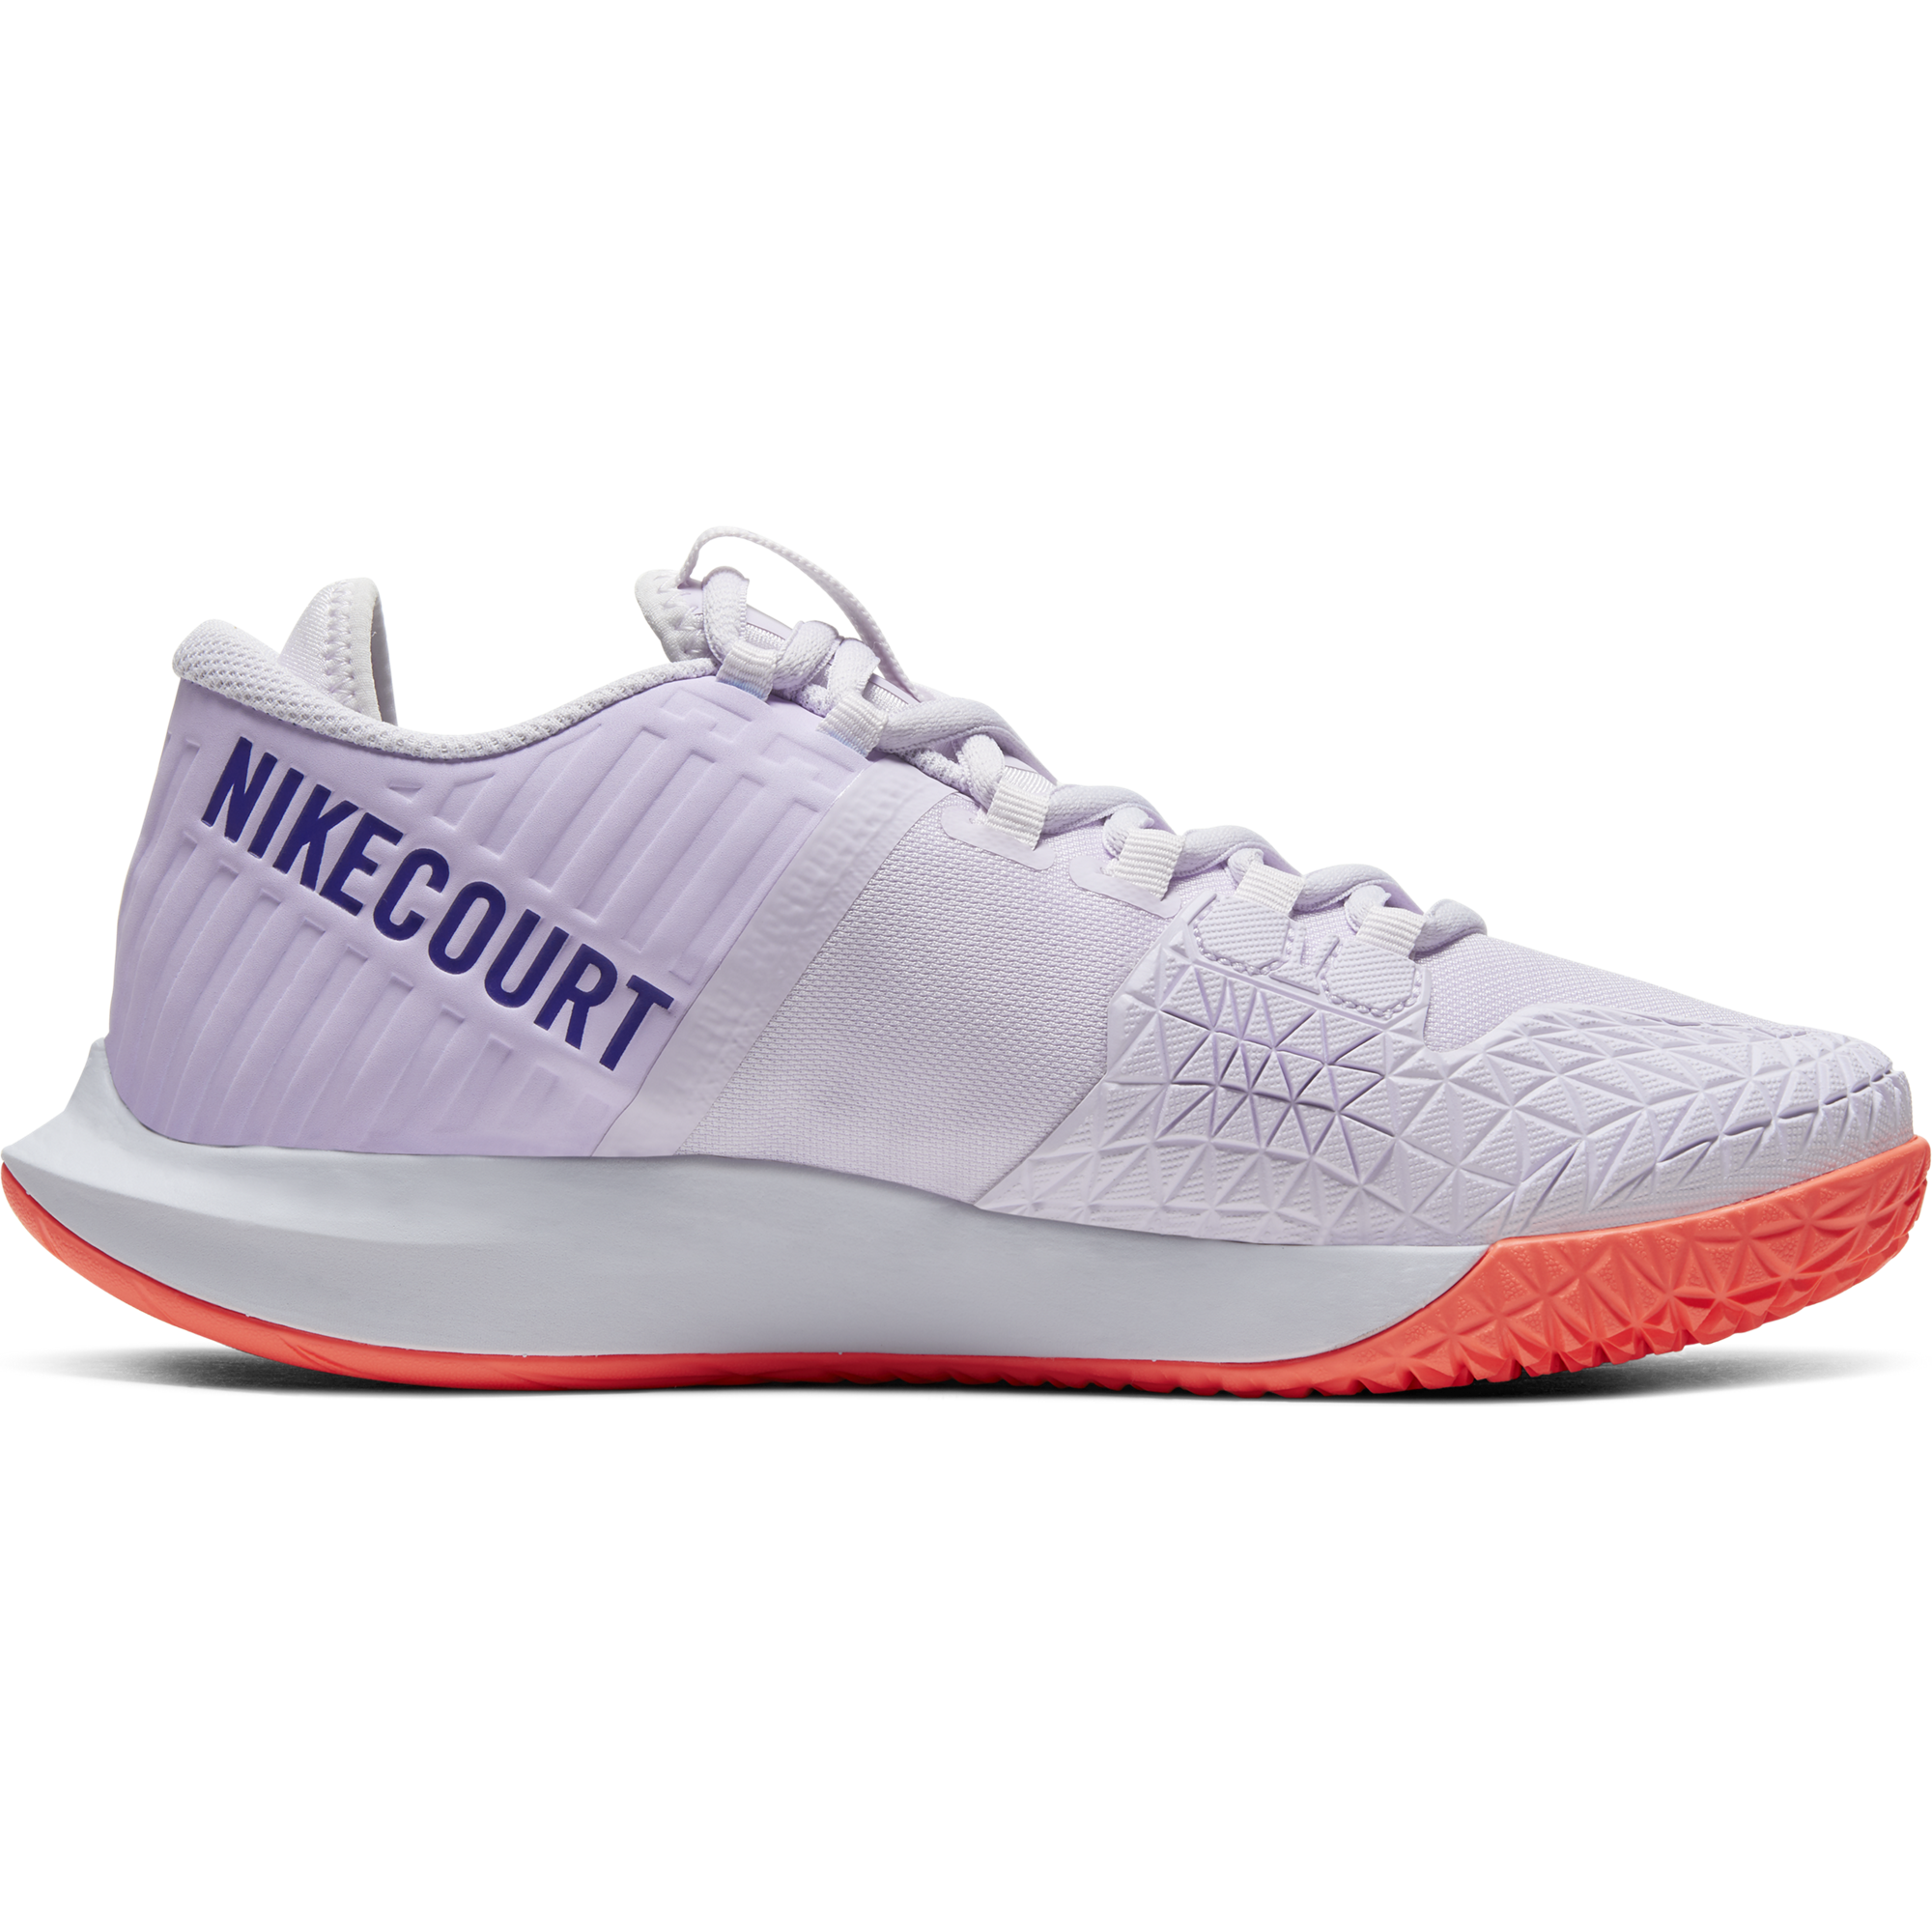 nikecourt air zoom zero women's tennis shoe